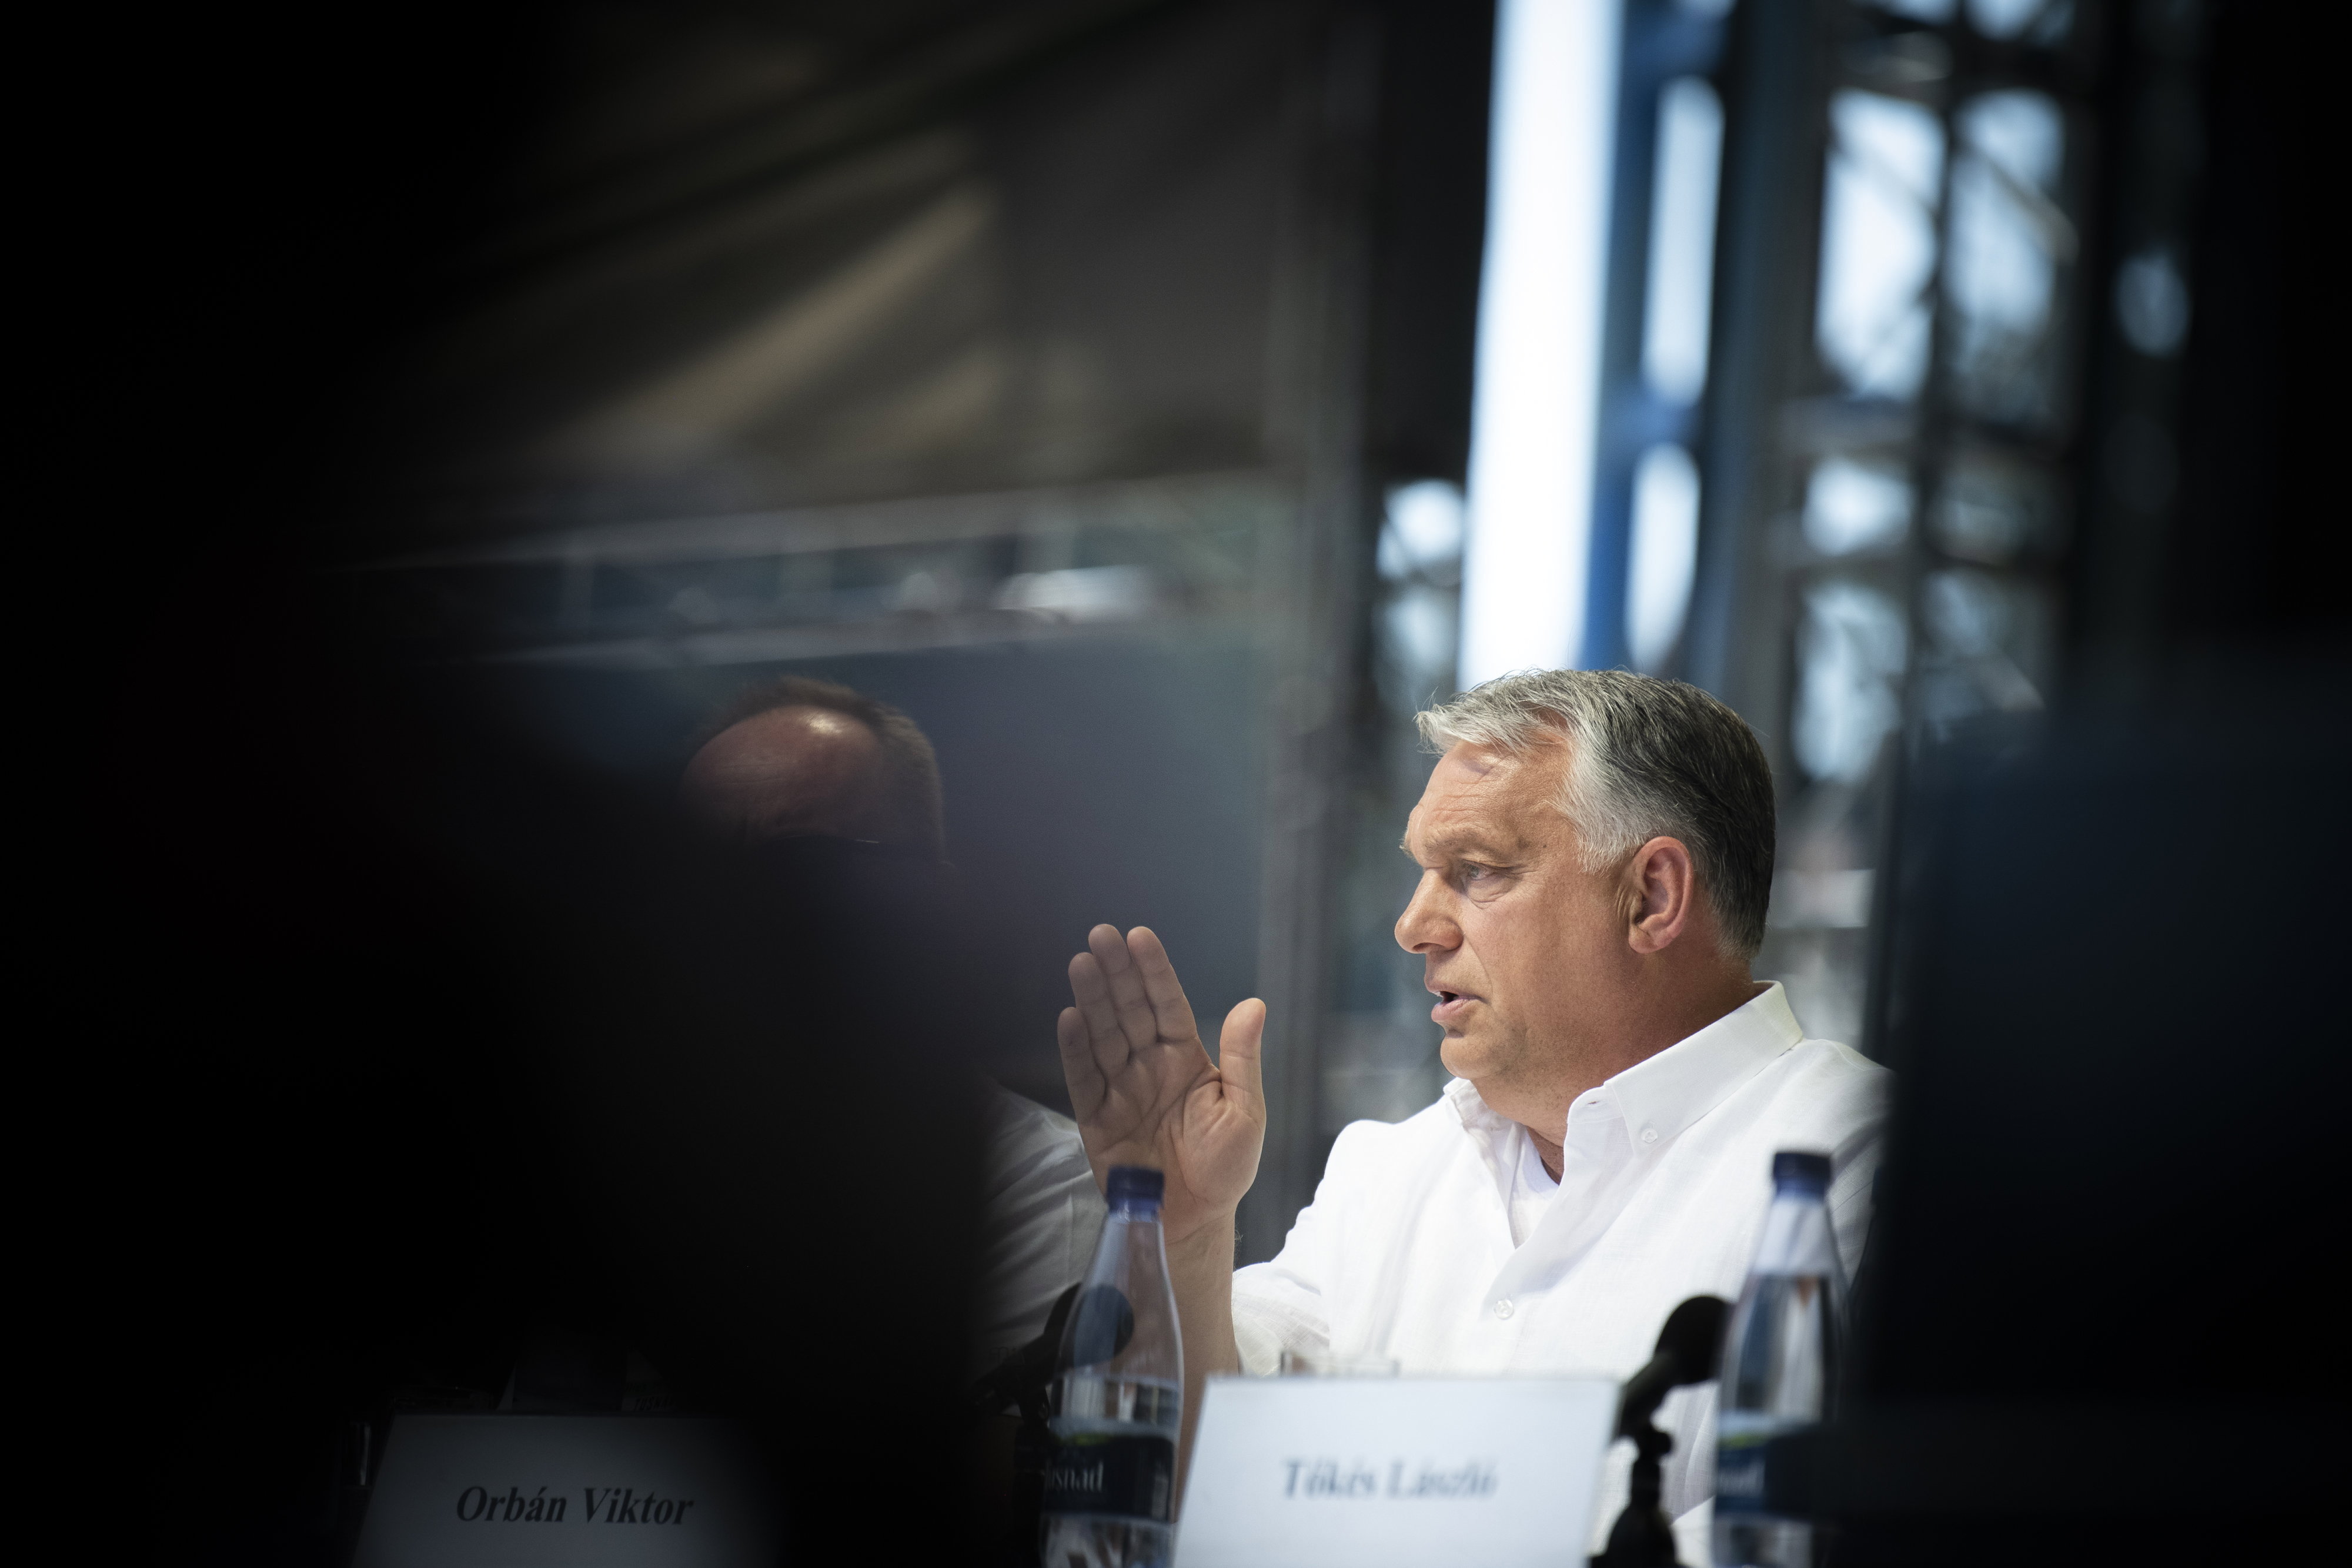 Orbán Viktor Tusványoson, 2022-ben